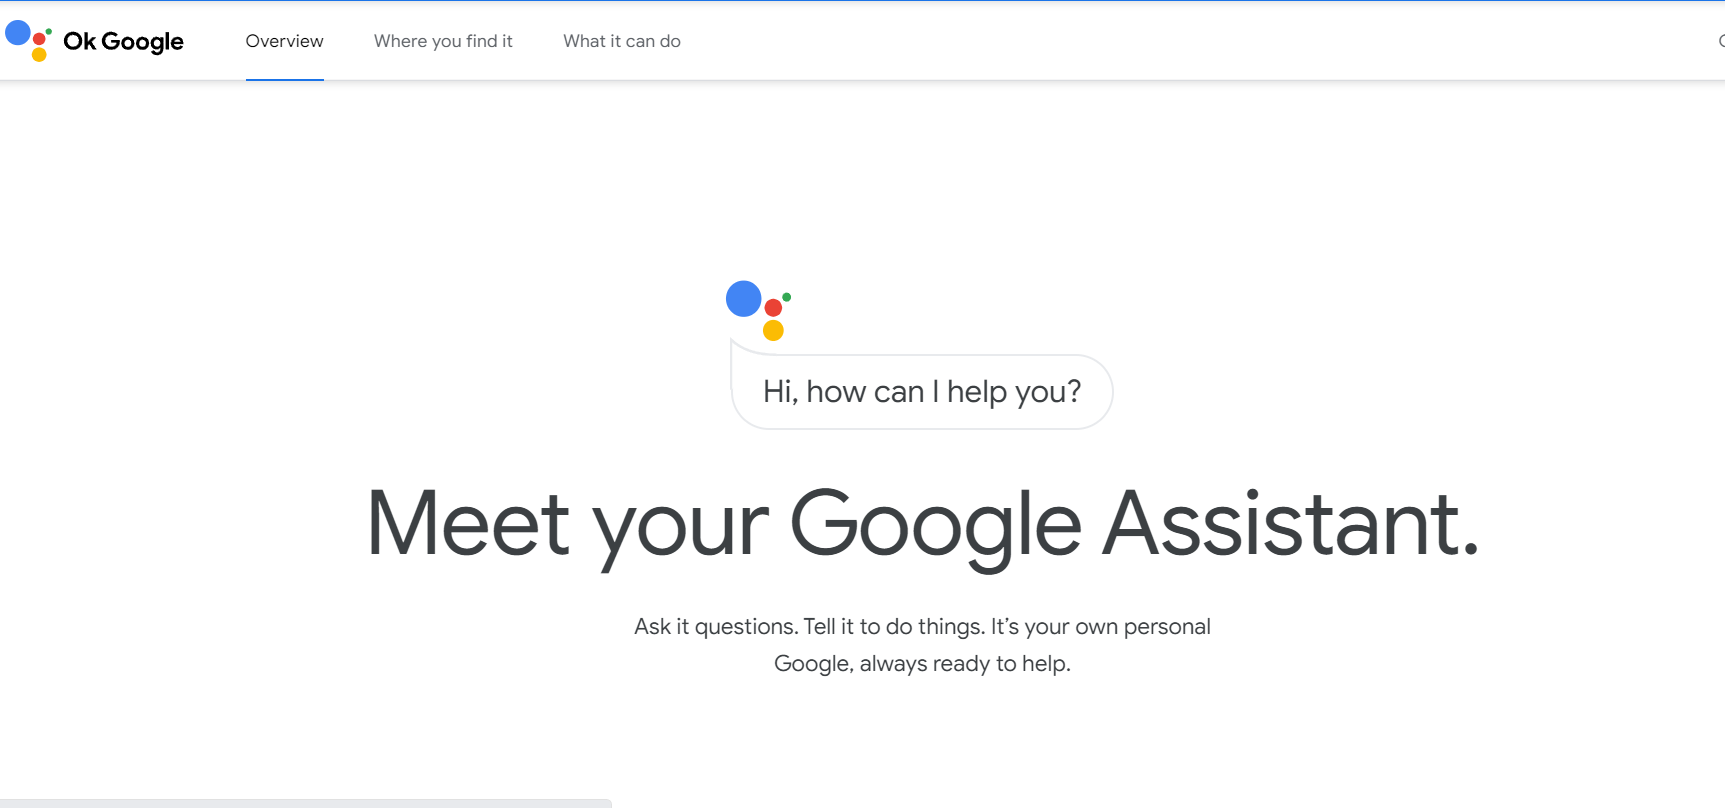 Google Assistant AI software